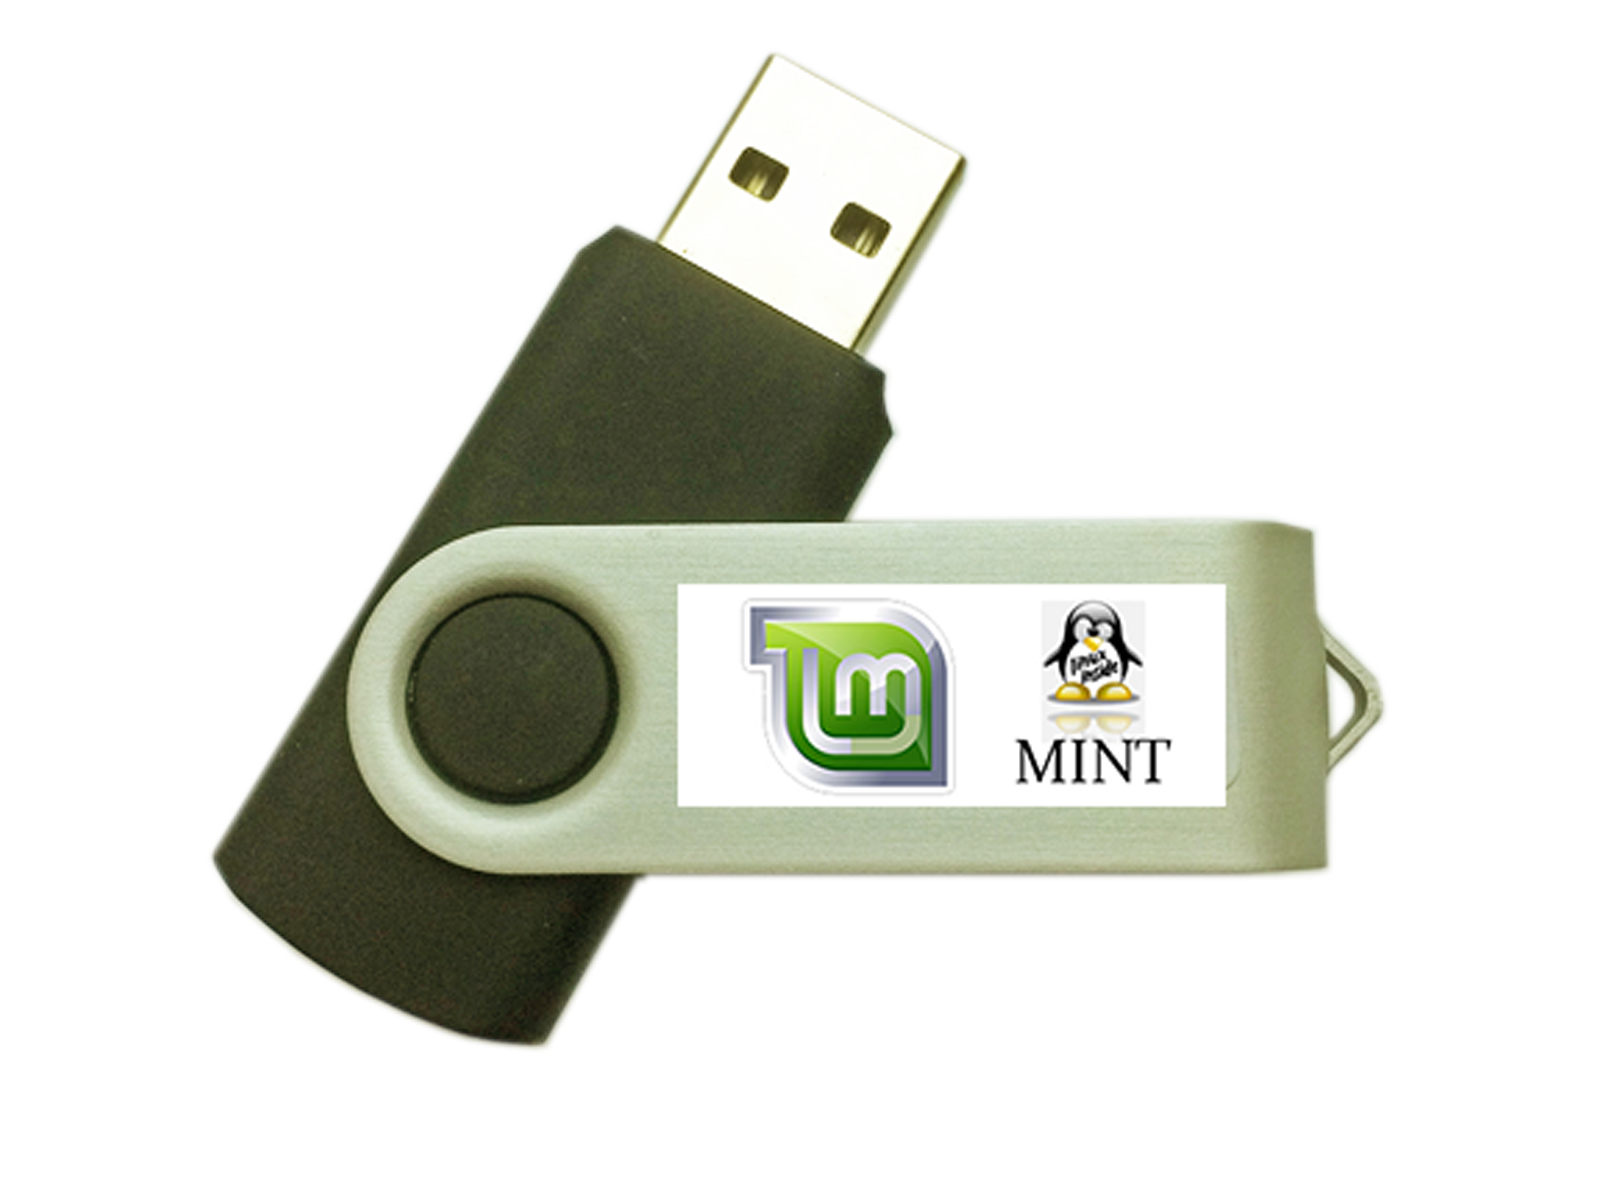 Linux Mint Cinnamon Operating System - Just like Windows - Bootable Live OS USB